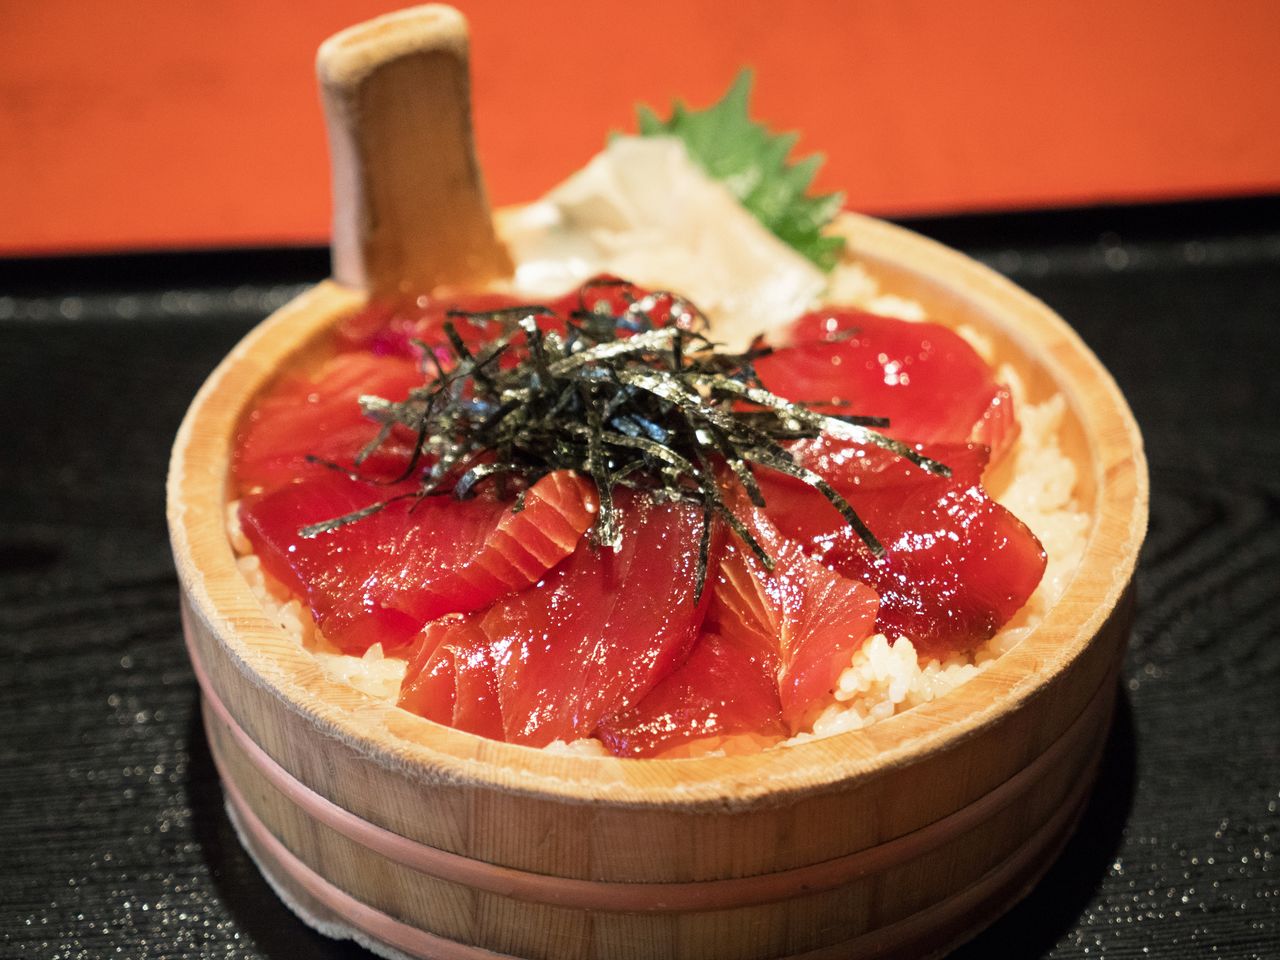 Le tekone-zushi, servi dans un te-oke, un plat en bois en forme de grosse louche.